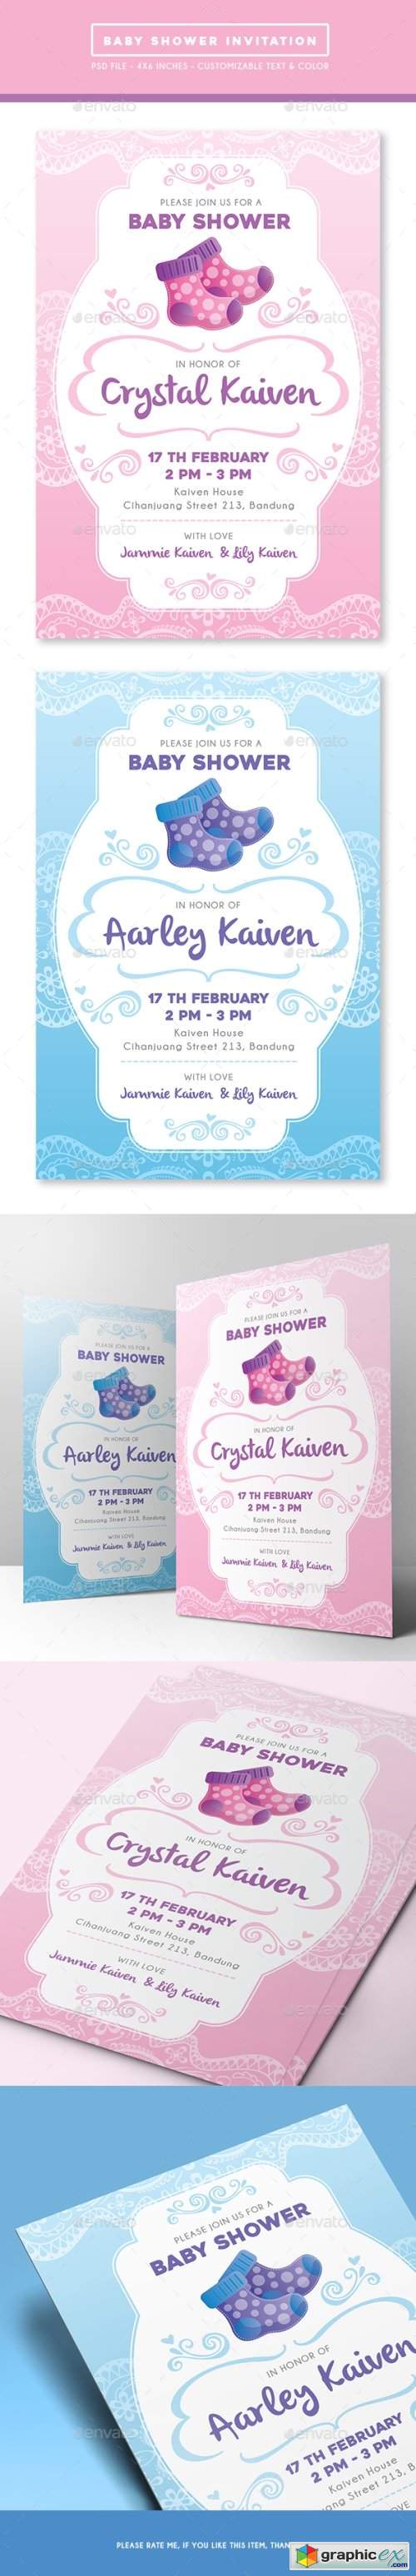 Baby Shower Invitation 15355796